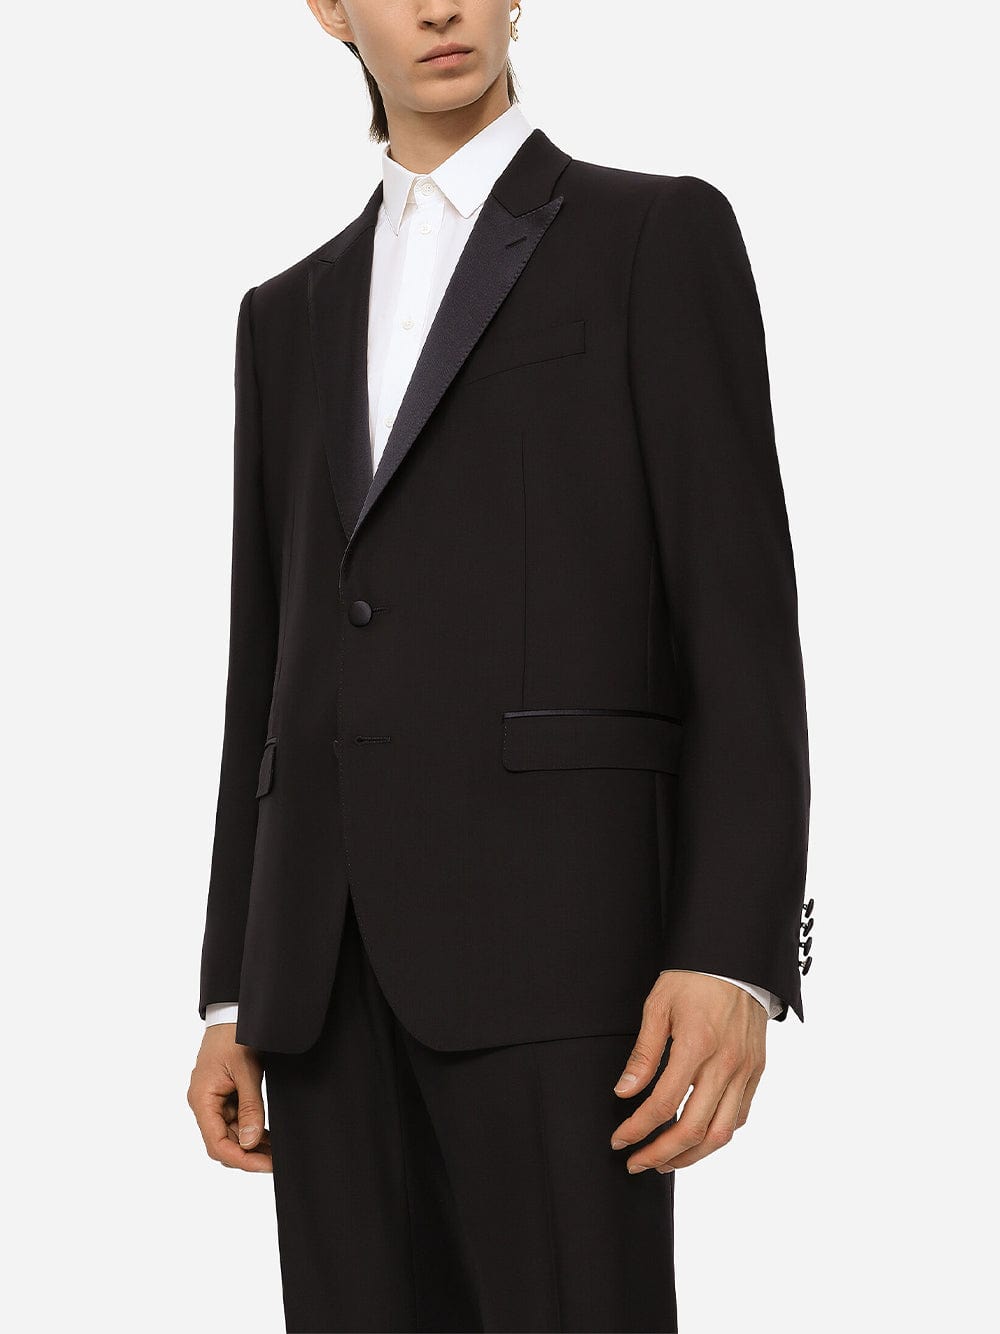 Dolce & Gabbana Martini-Fit Tuxedo Suit